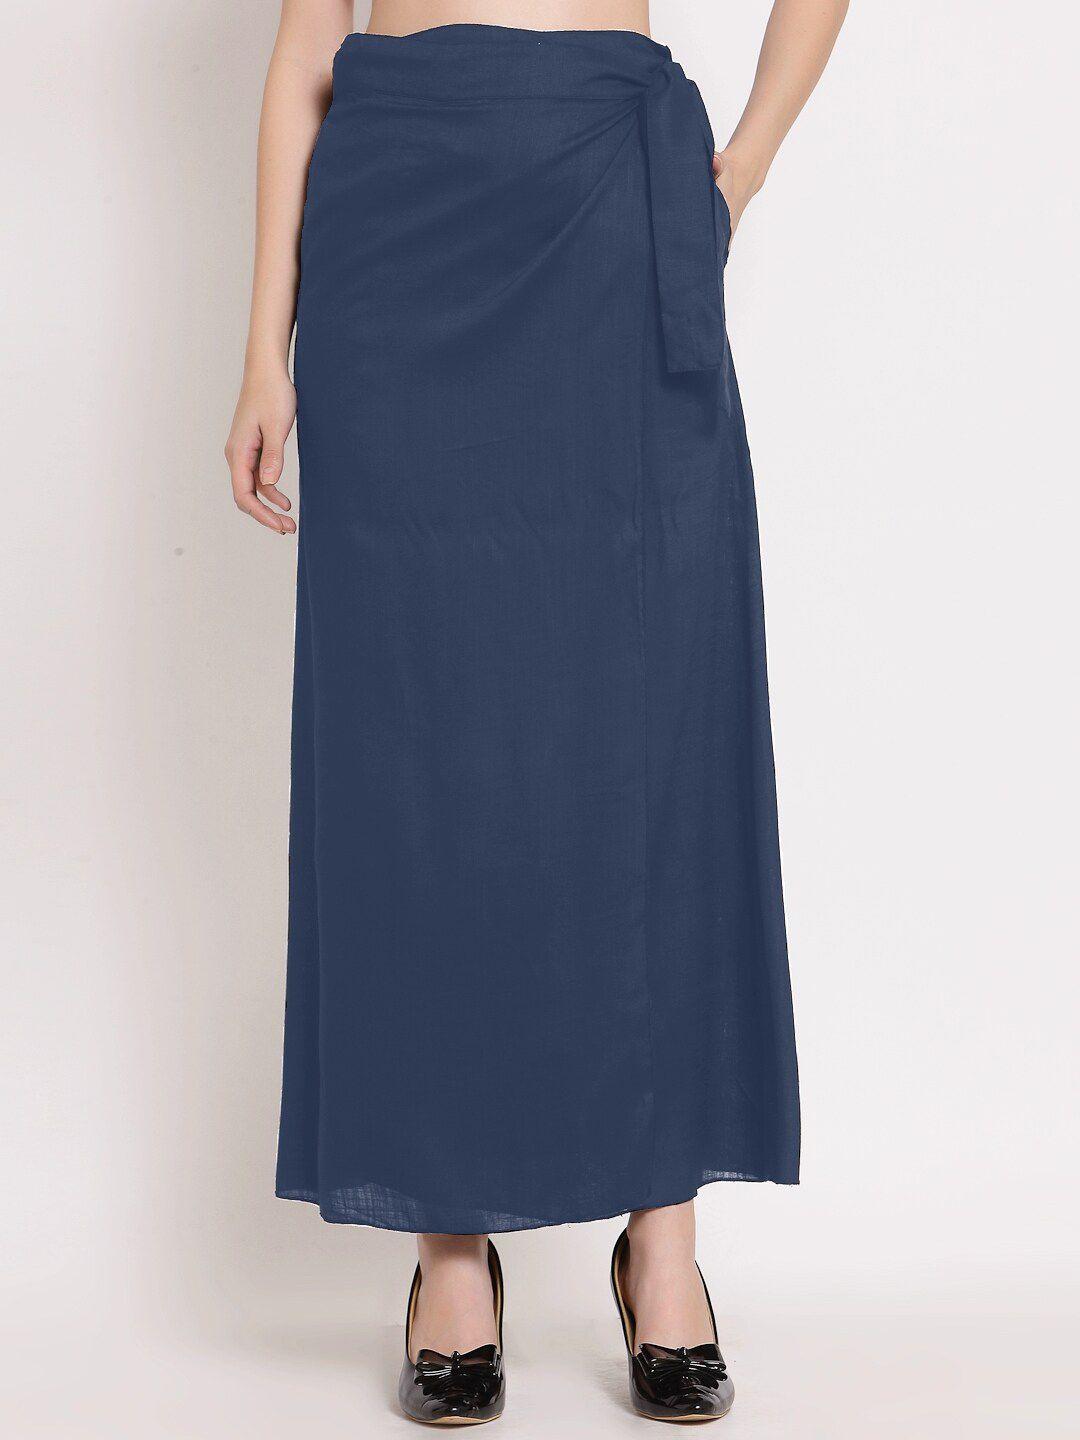 patrorna women grey solid plus size wrap maxi skirt